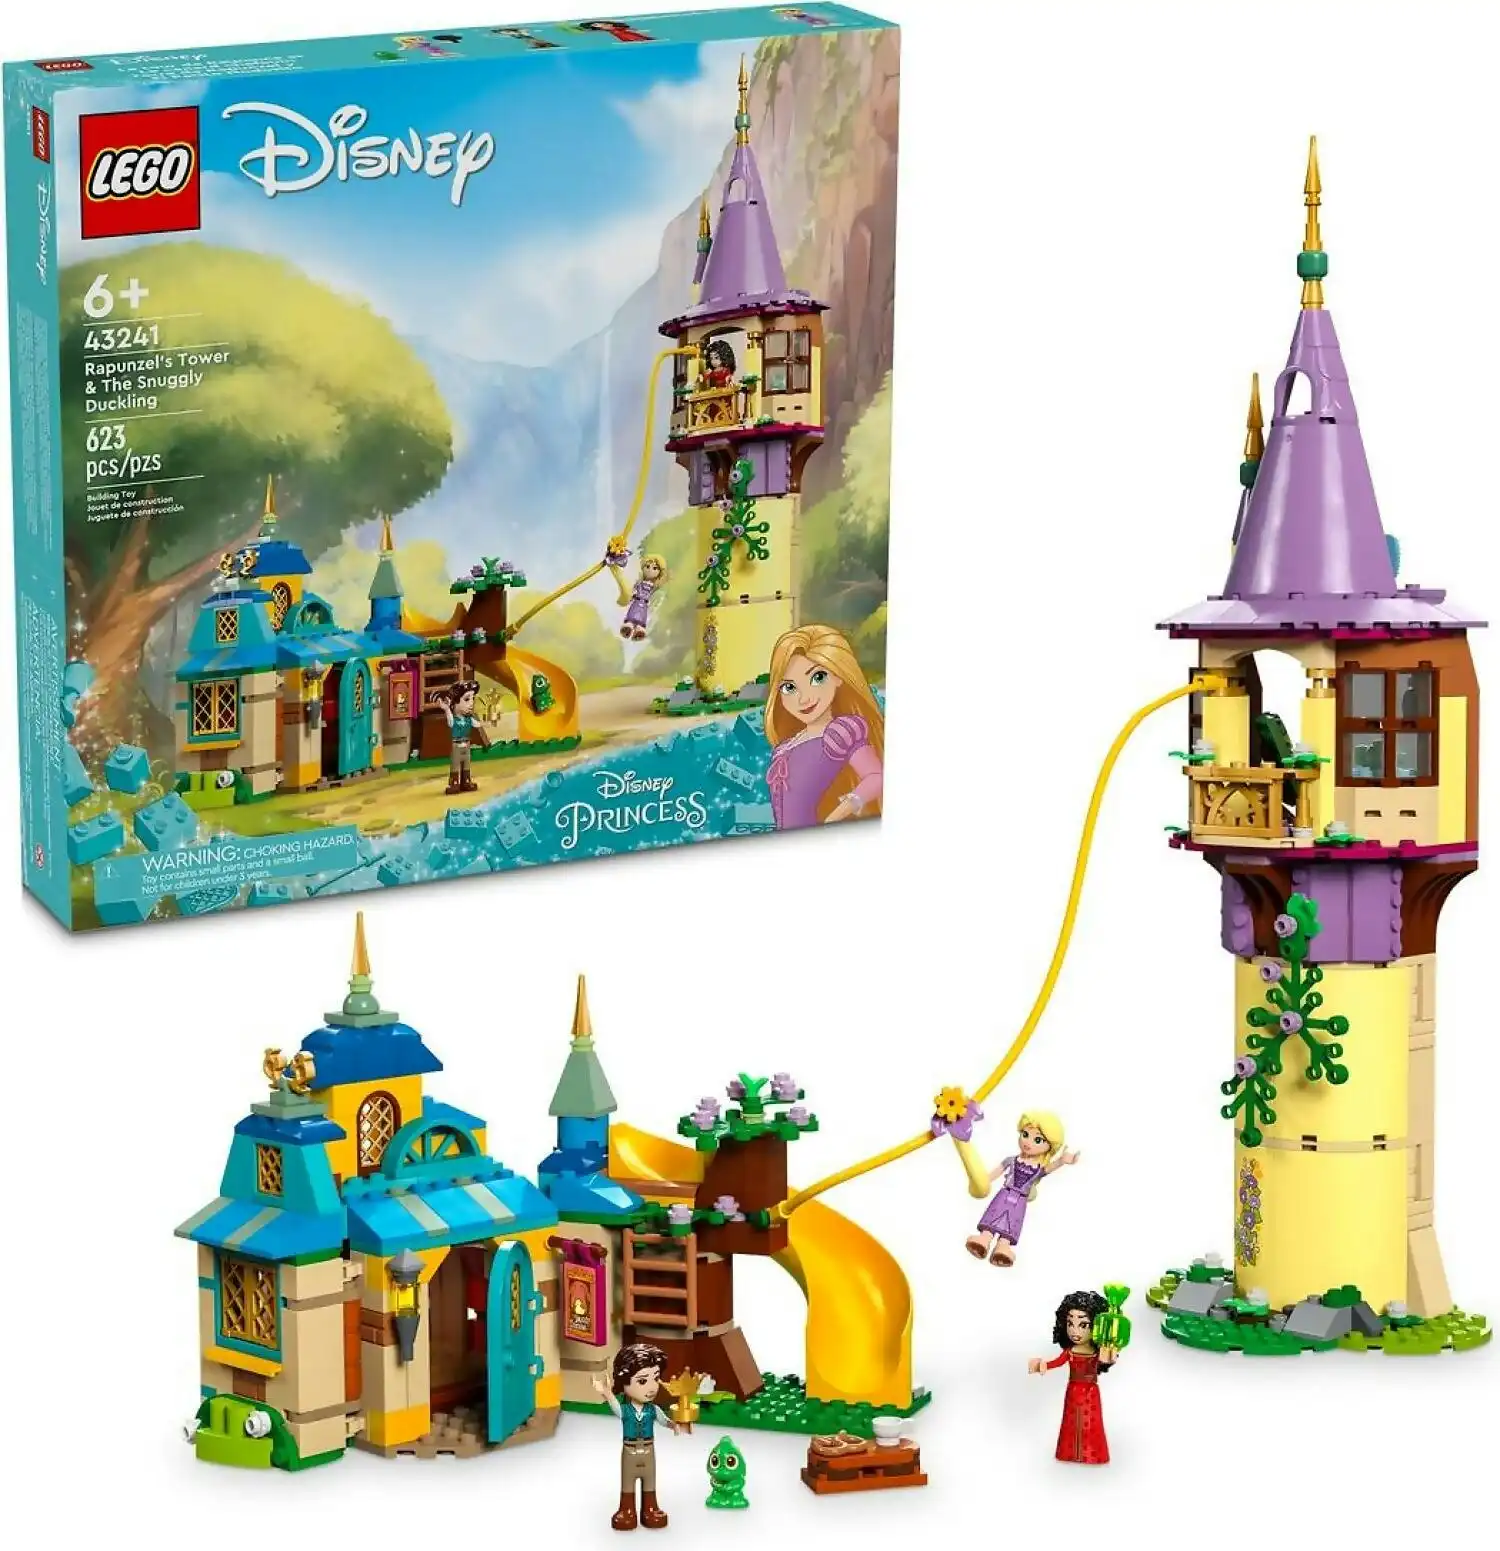 LEGO 43241 Rapunzel's Tower & The Snuggly Duckling - Disney Princess